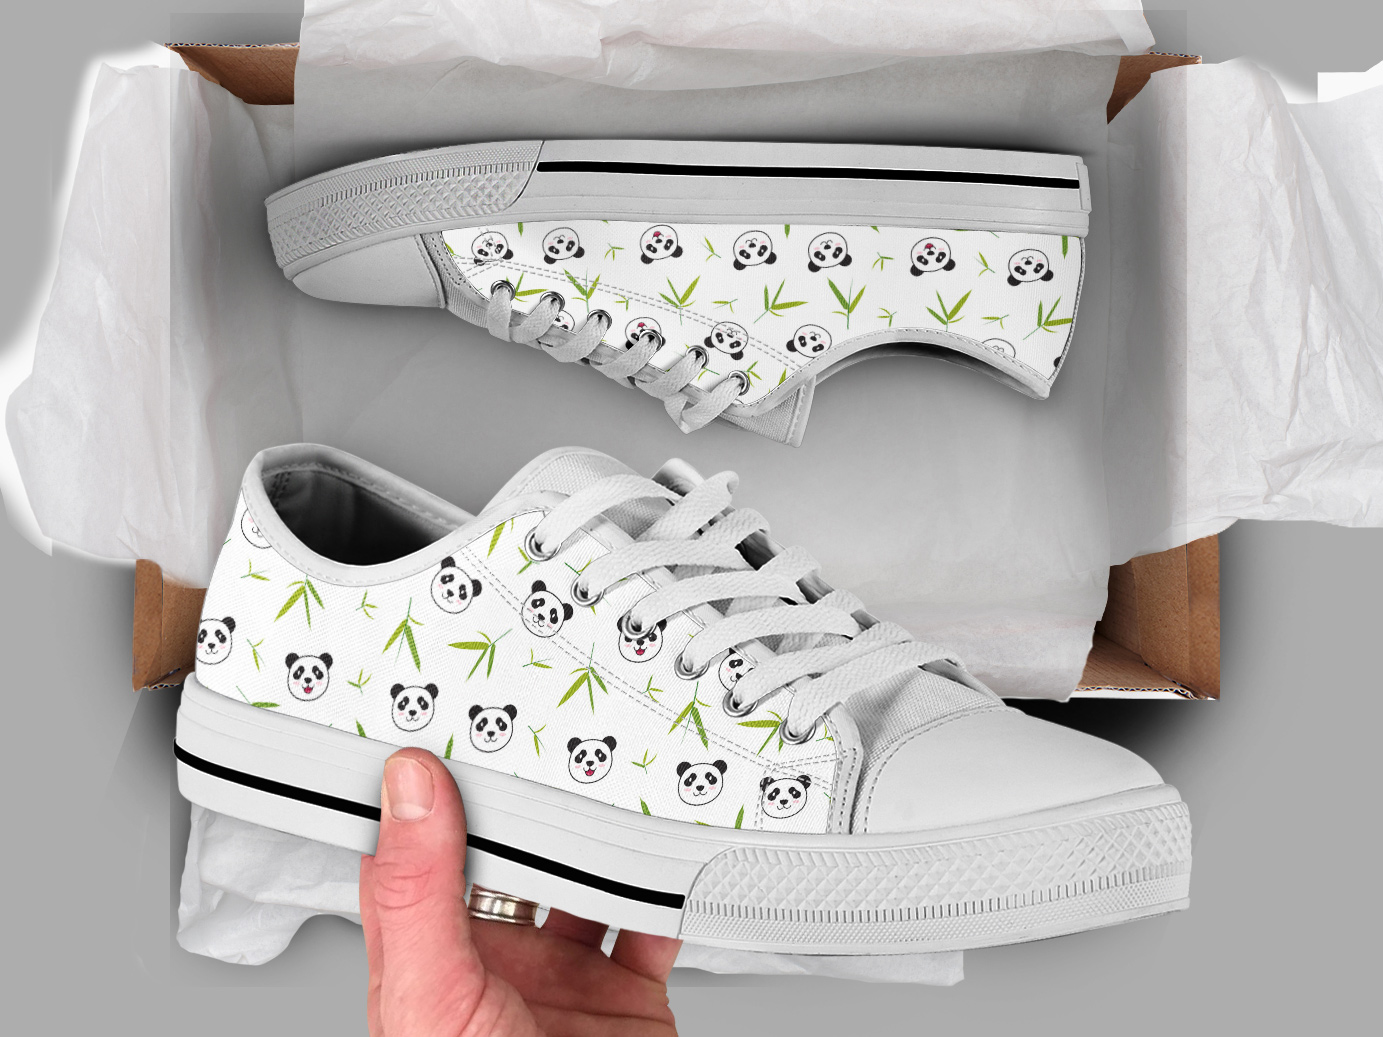 Panda Animal Print Shoes | Custom Low Tops Sneakers For Kids & Adults